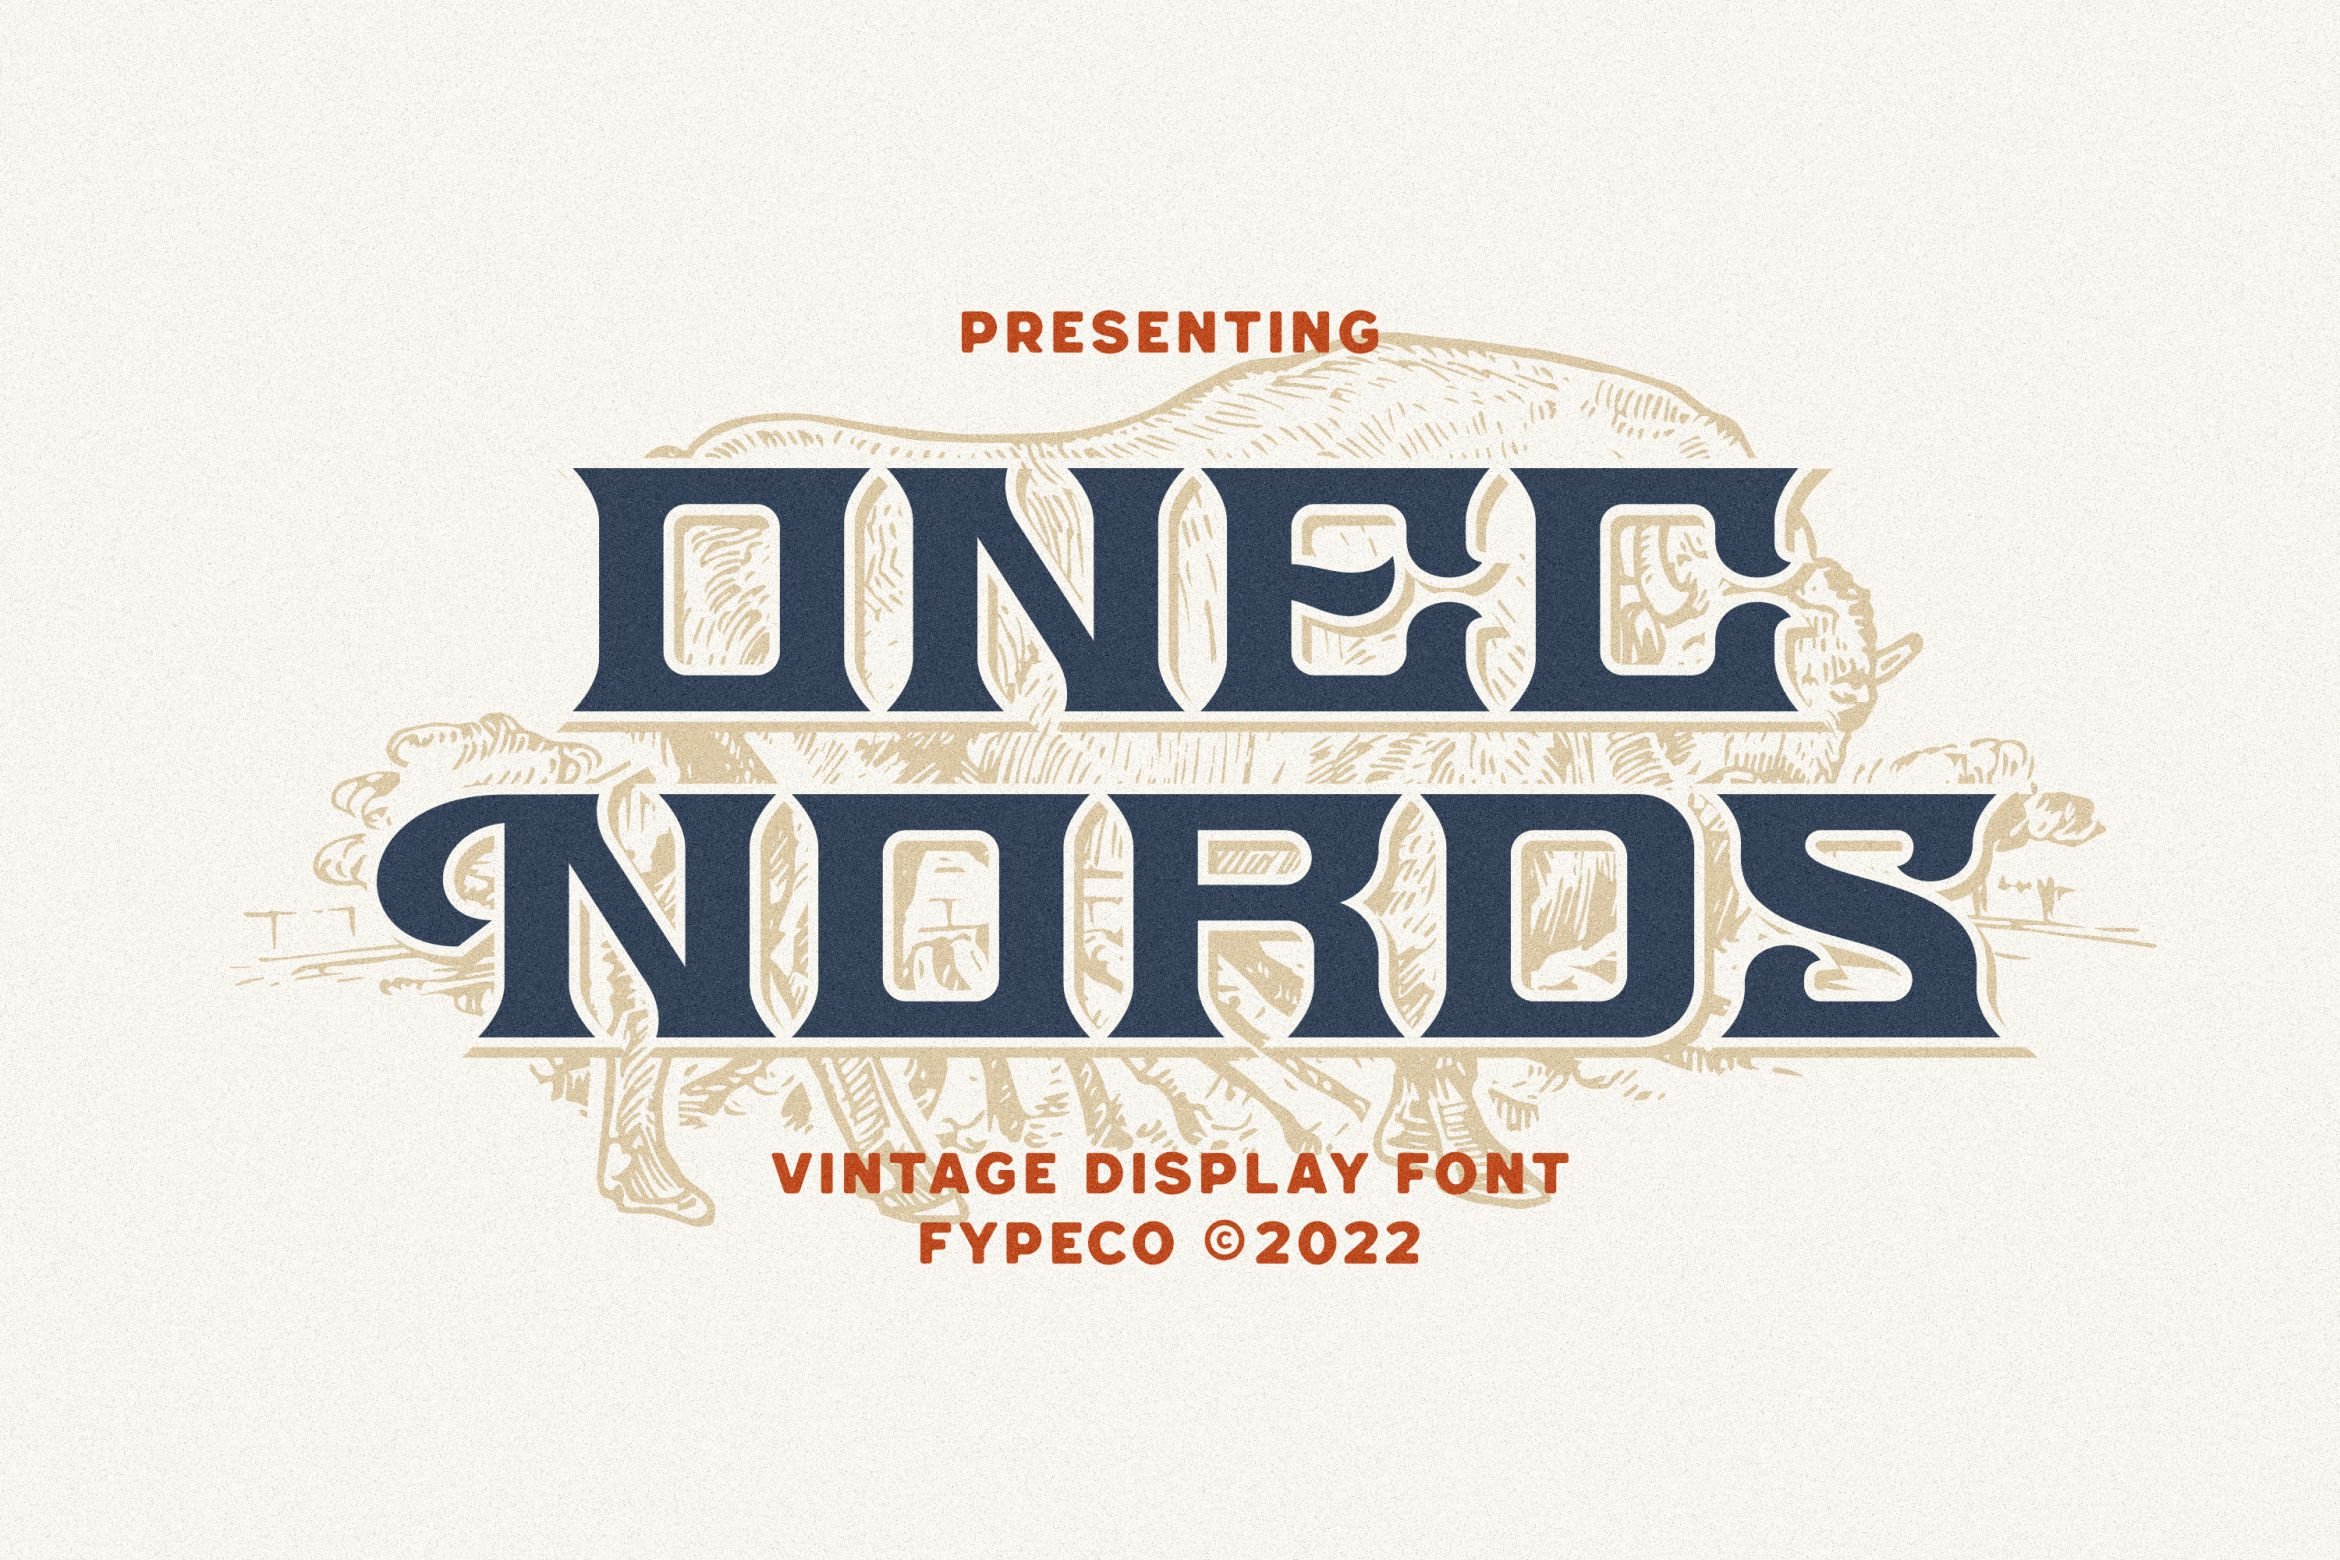 Onec Nords - Vintage Display Fontcover image.